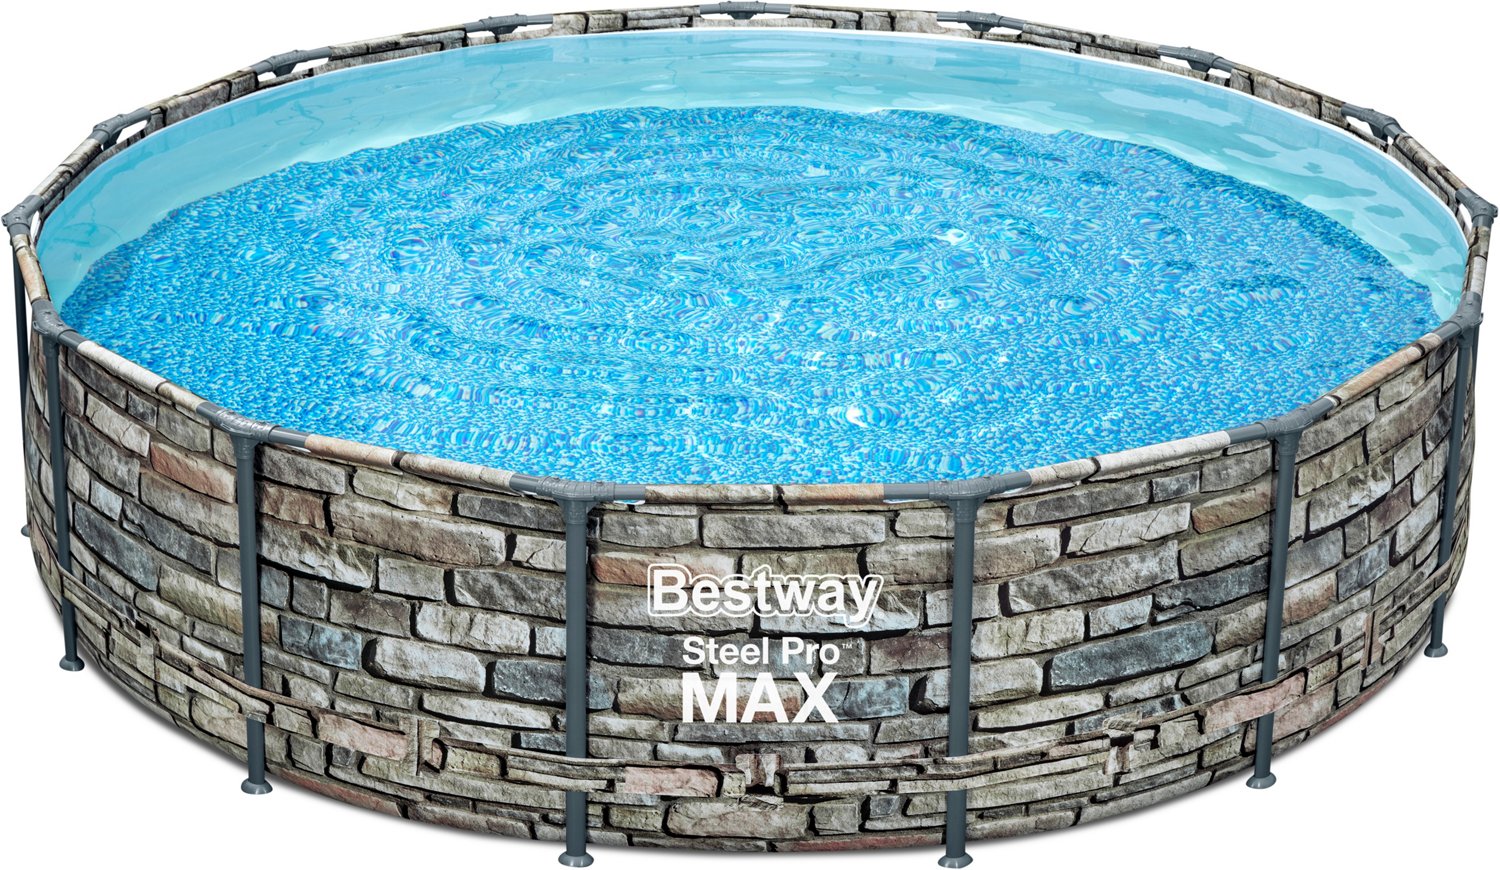 Resoneer als je kunt Maak los Bestway Steel Pro MAX 15 ft x 42 in Pool Set | Academy